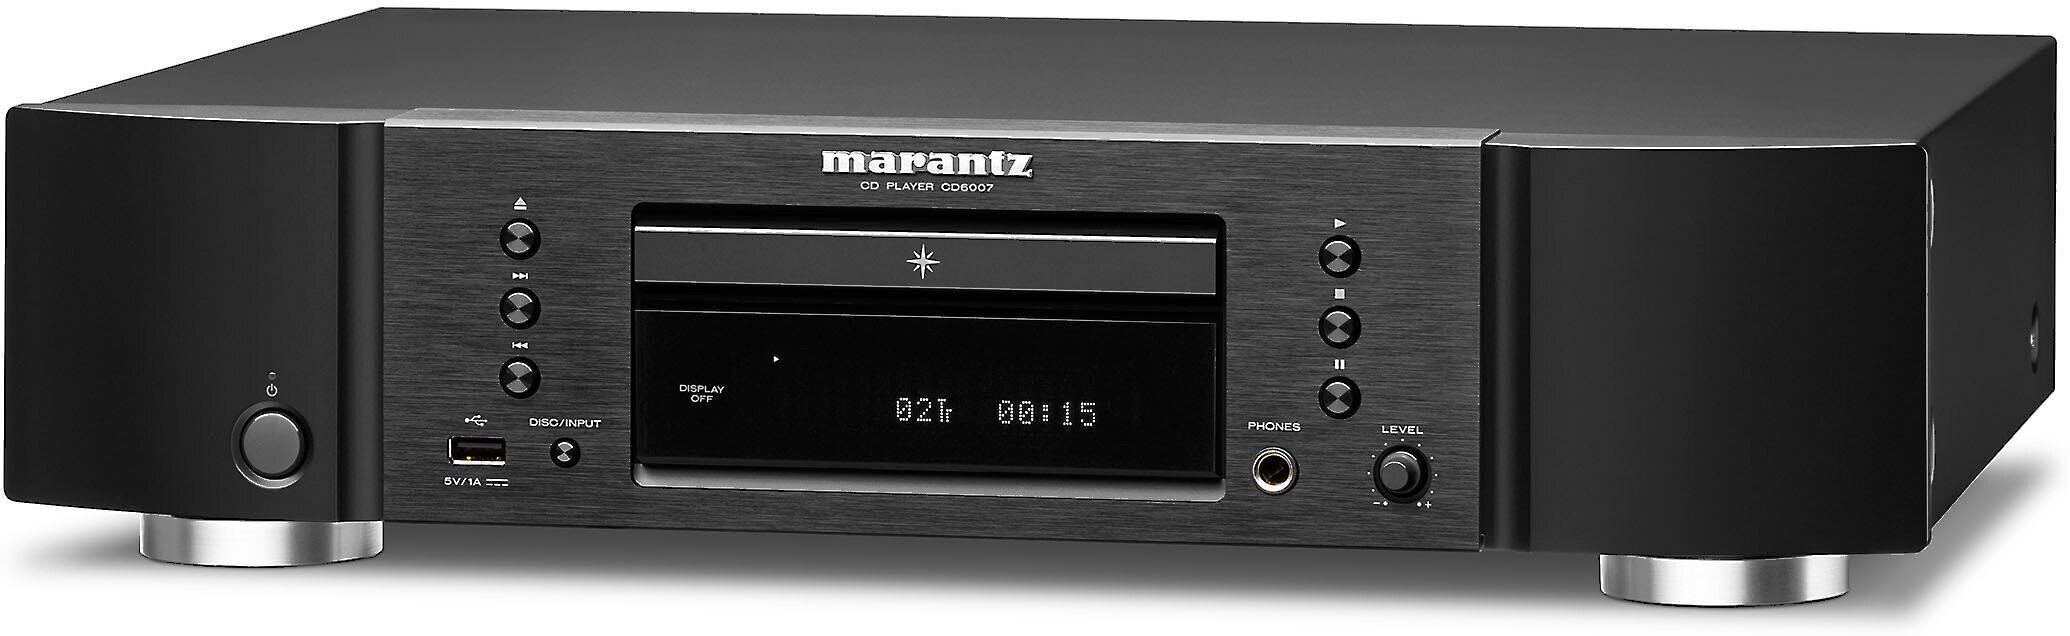 Middag eten Luxe Drijvende kracht Customer Reviews: Marantz CD6007 Single-disc CD player with USB port for  thumb drives at Crutchfield